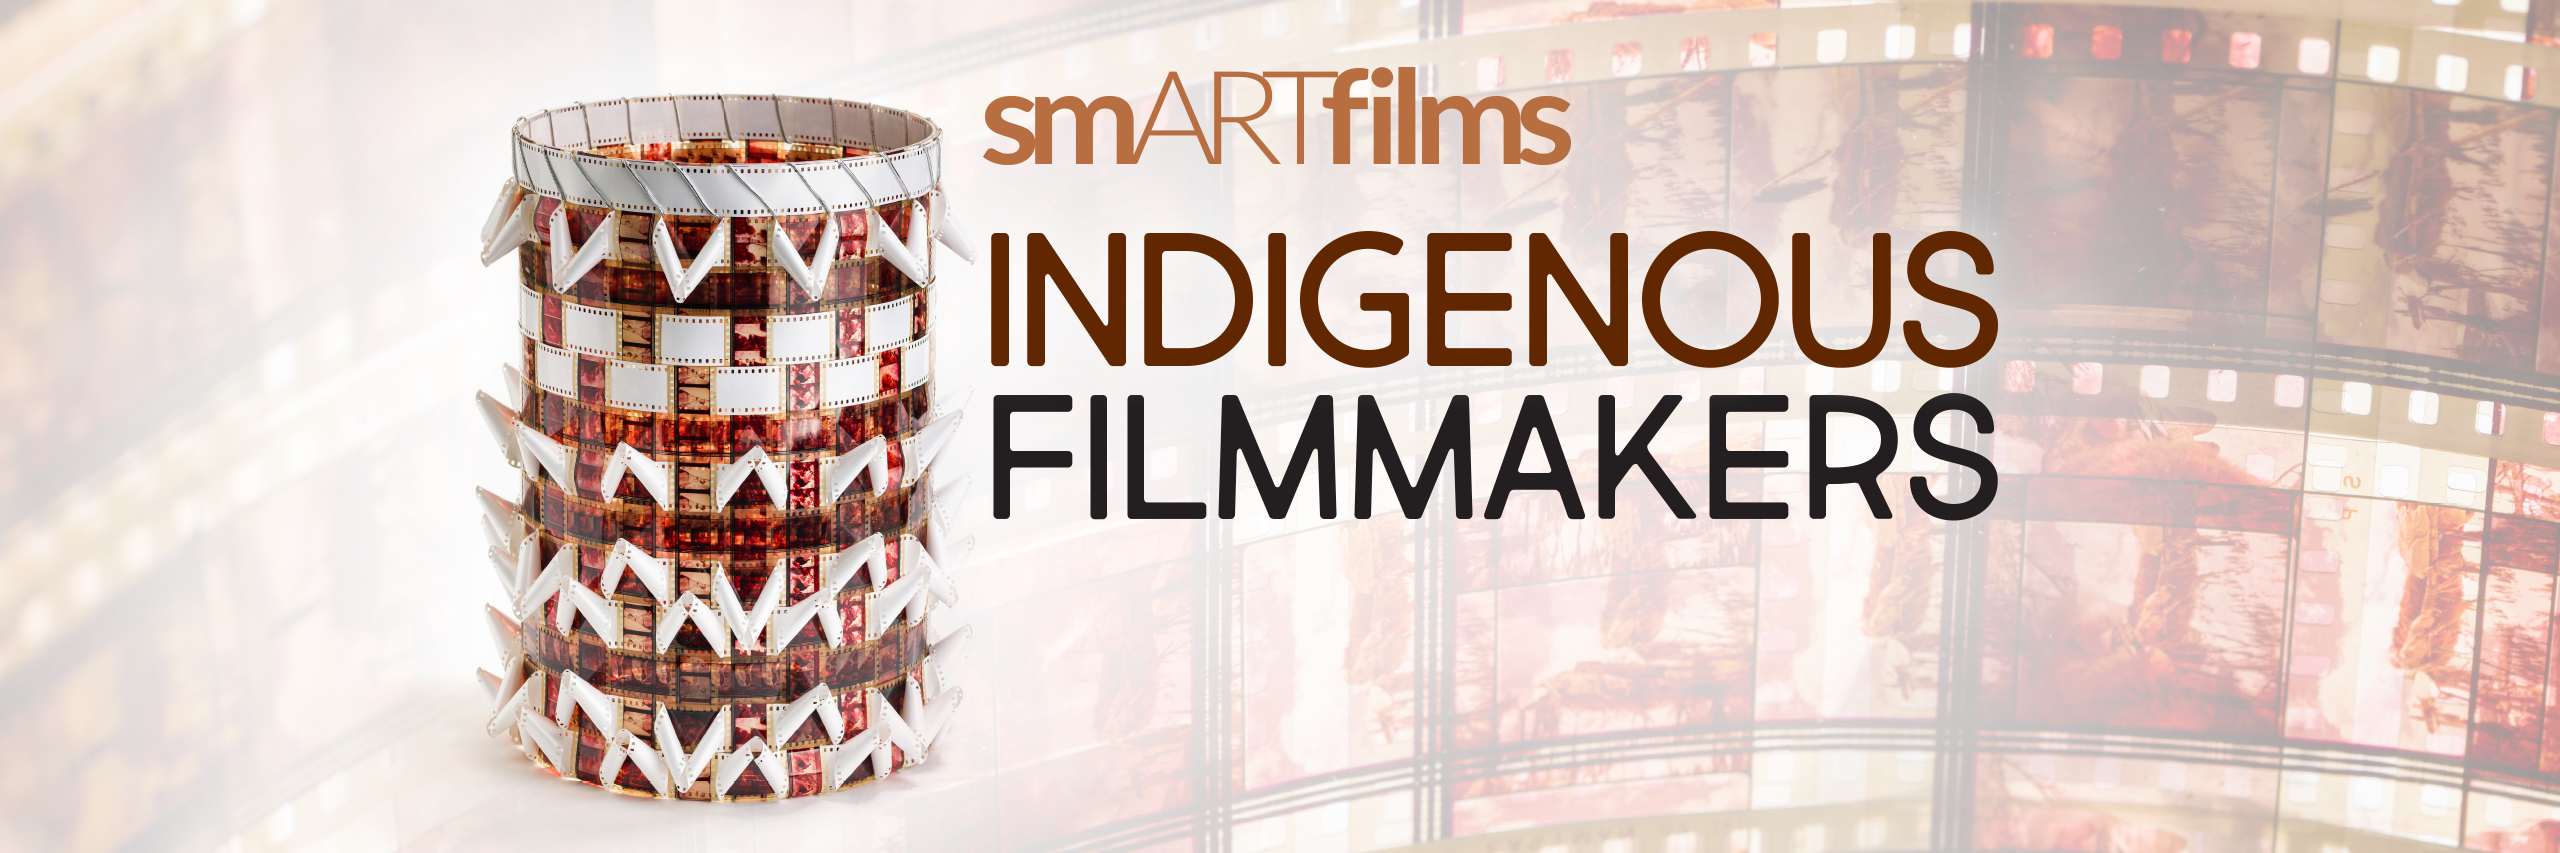 Header for Indigenous Filmmaker series